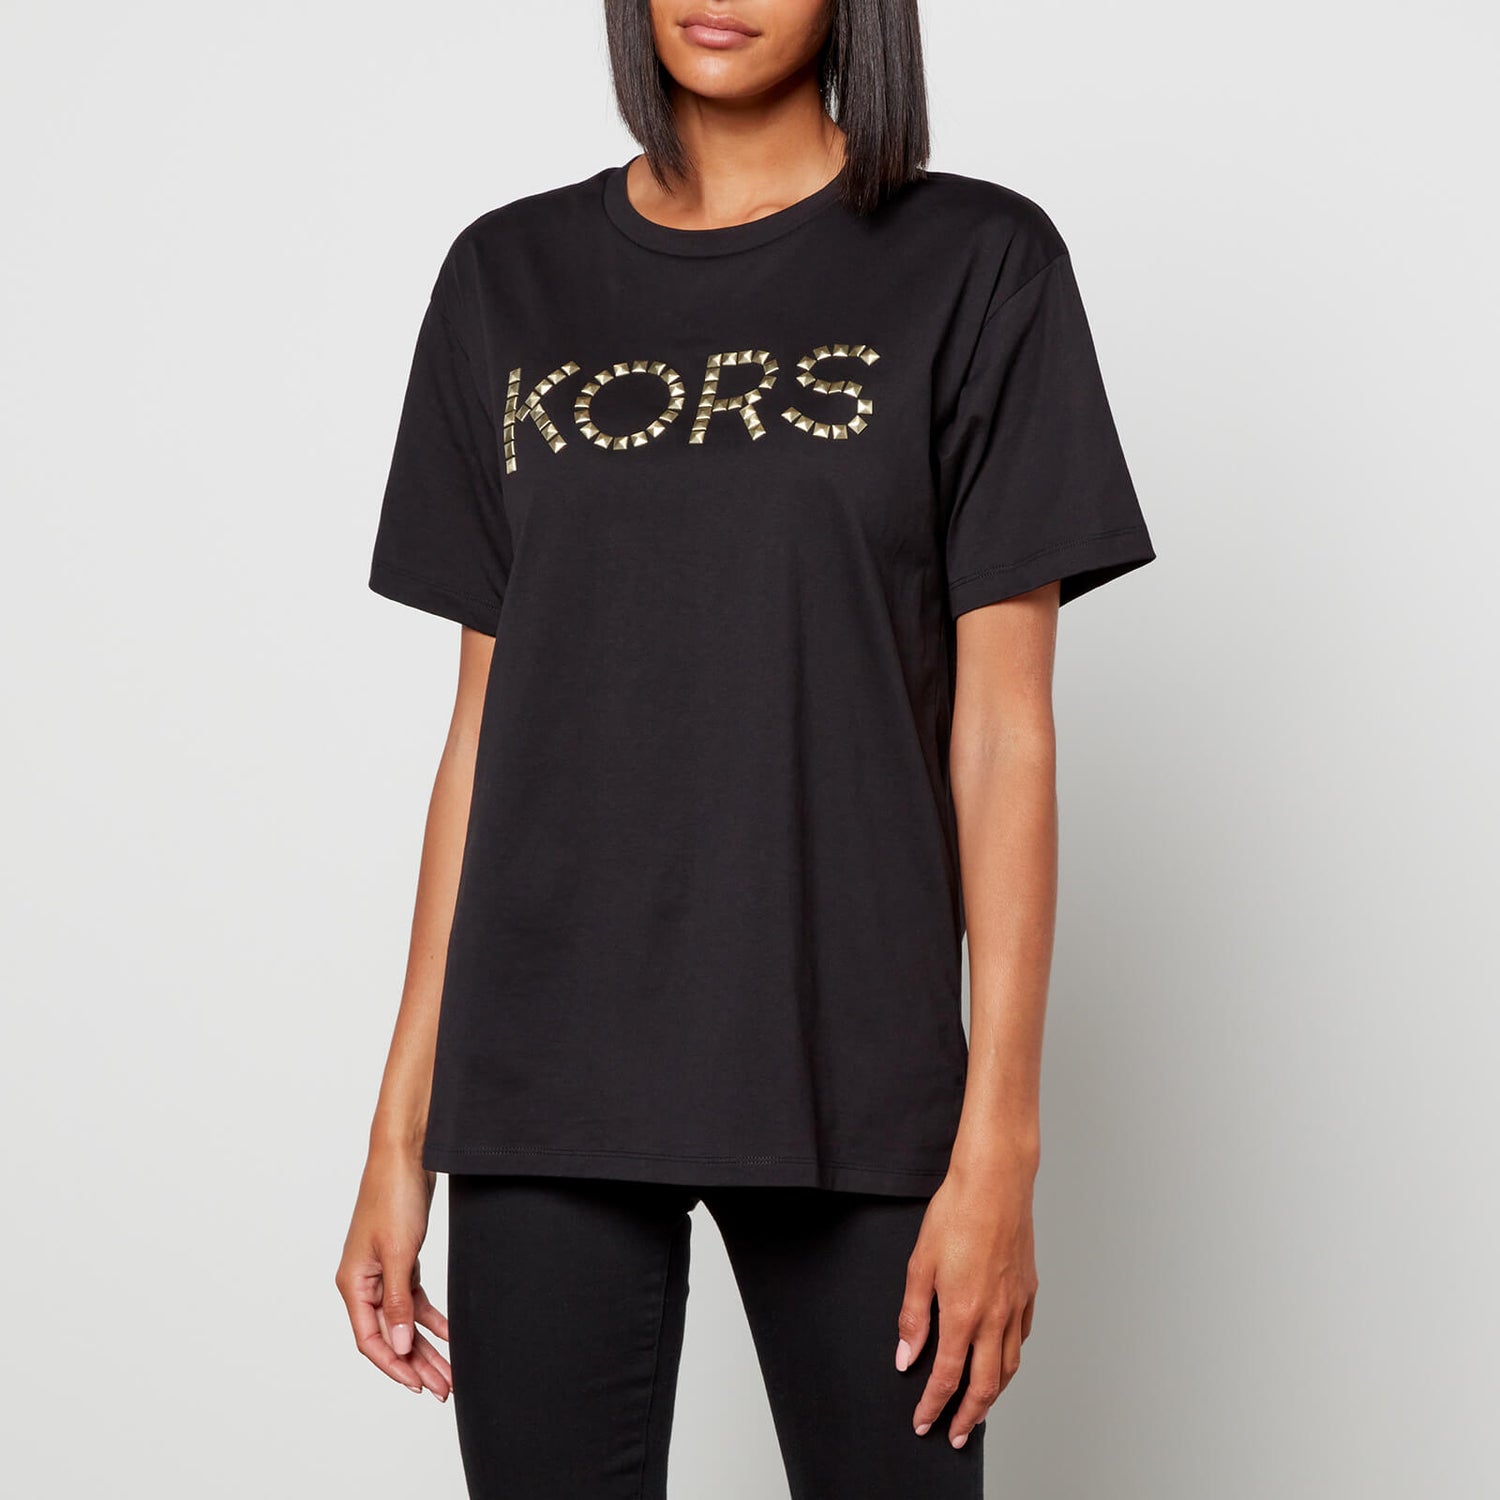 MICHAEL Michael Kors Women's Studded Kors Bf T-Shirt - Black - XS